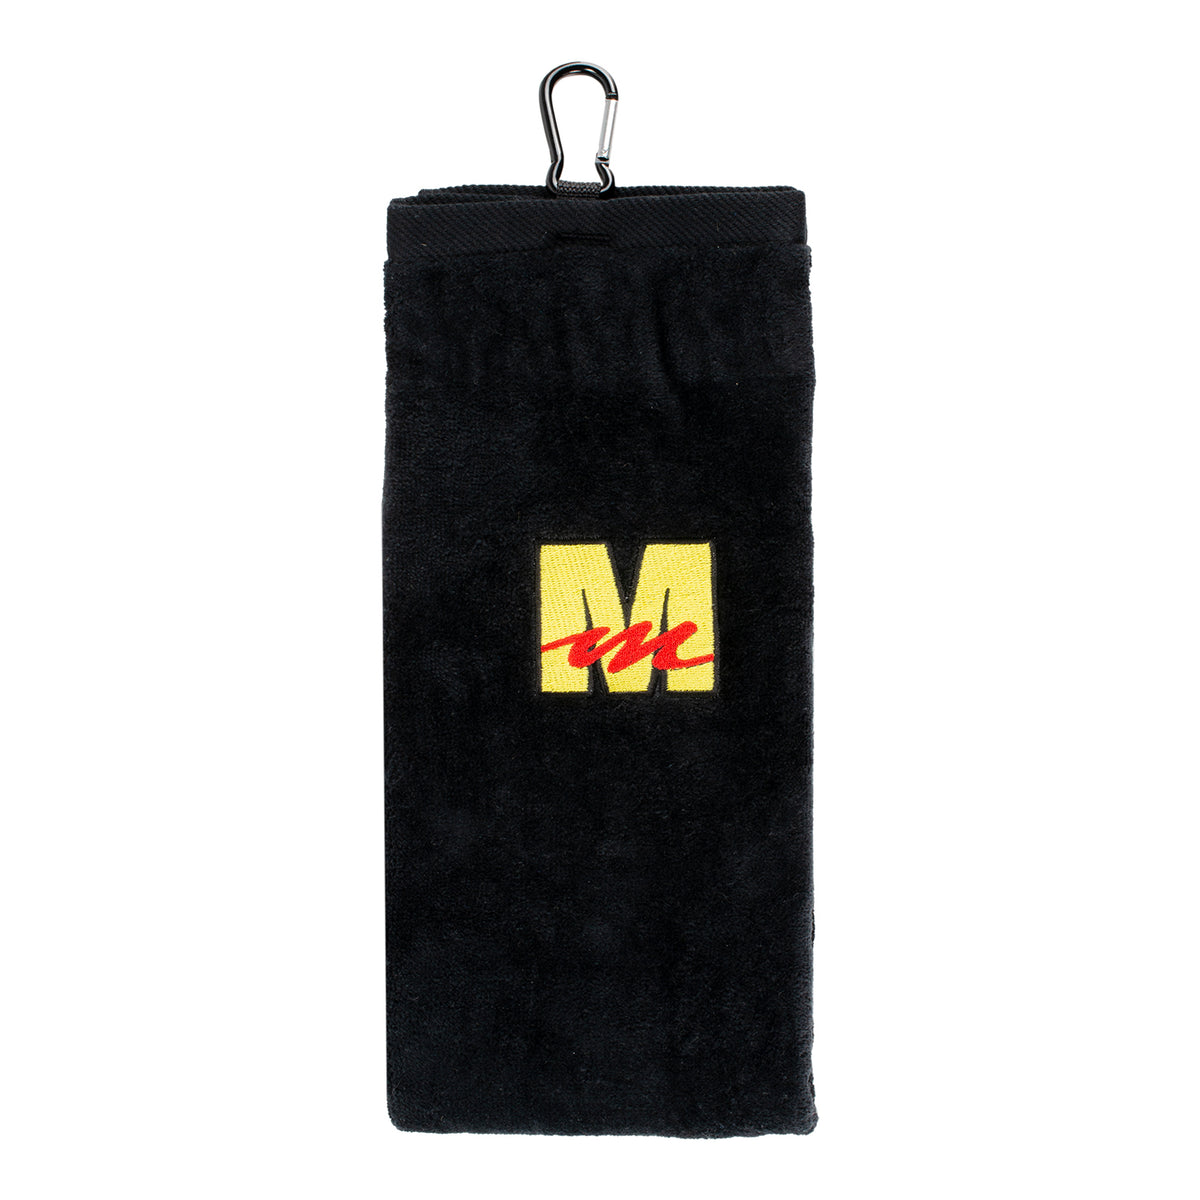 Mecum Auctions Golf Towel - Front View